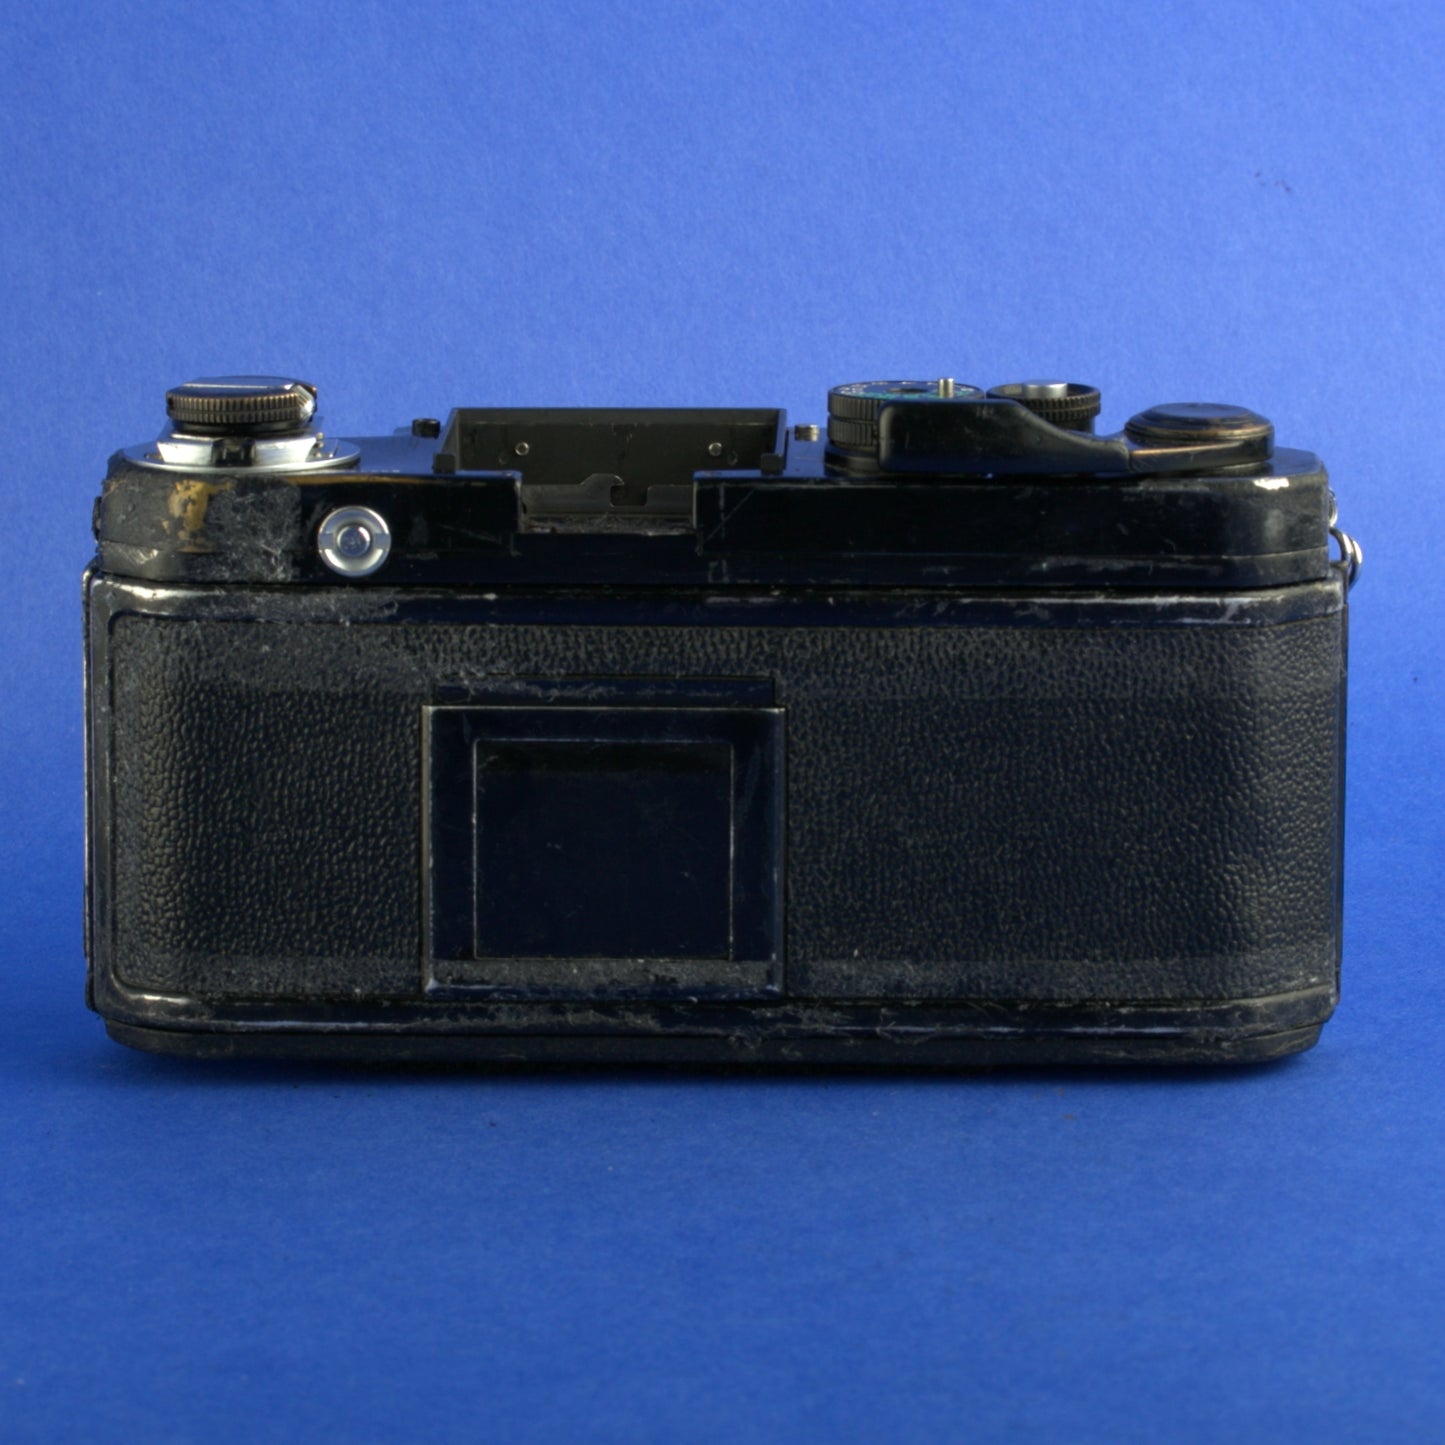 Nikon F2 Film Camera Body Only